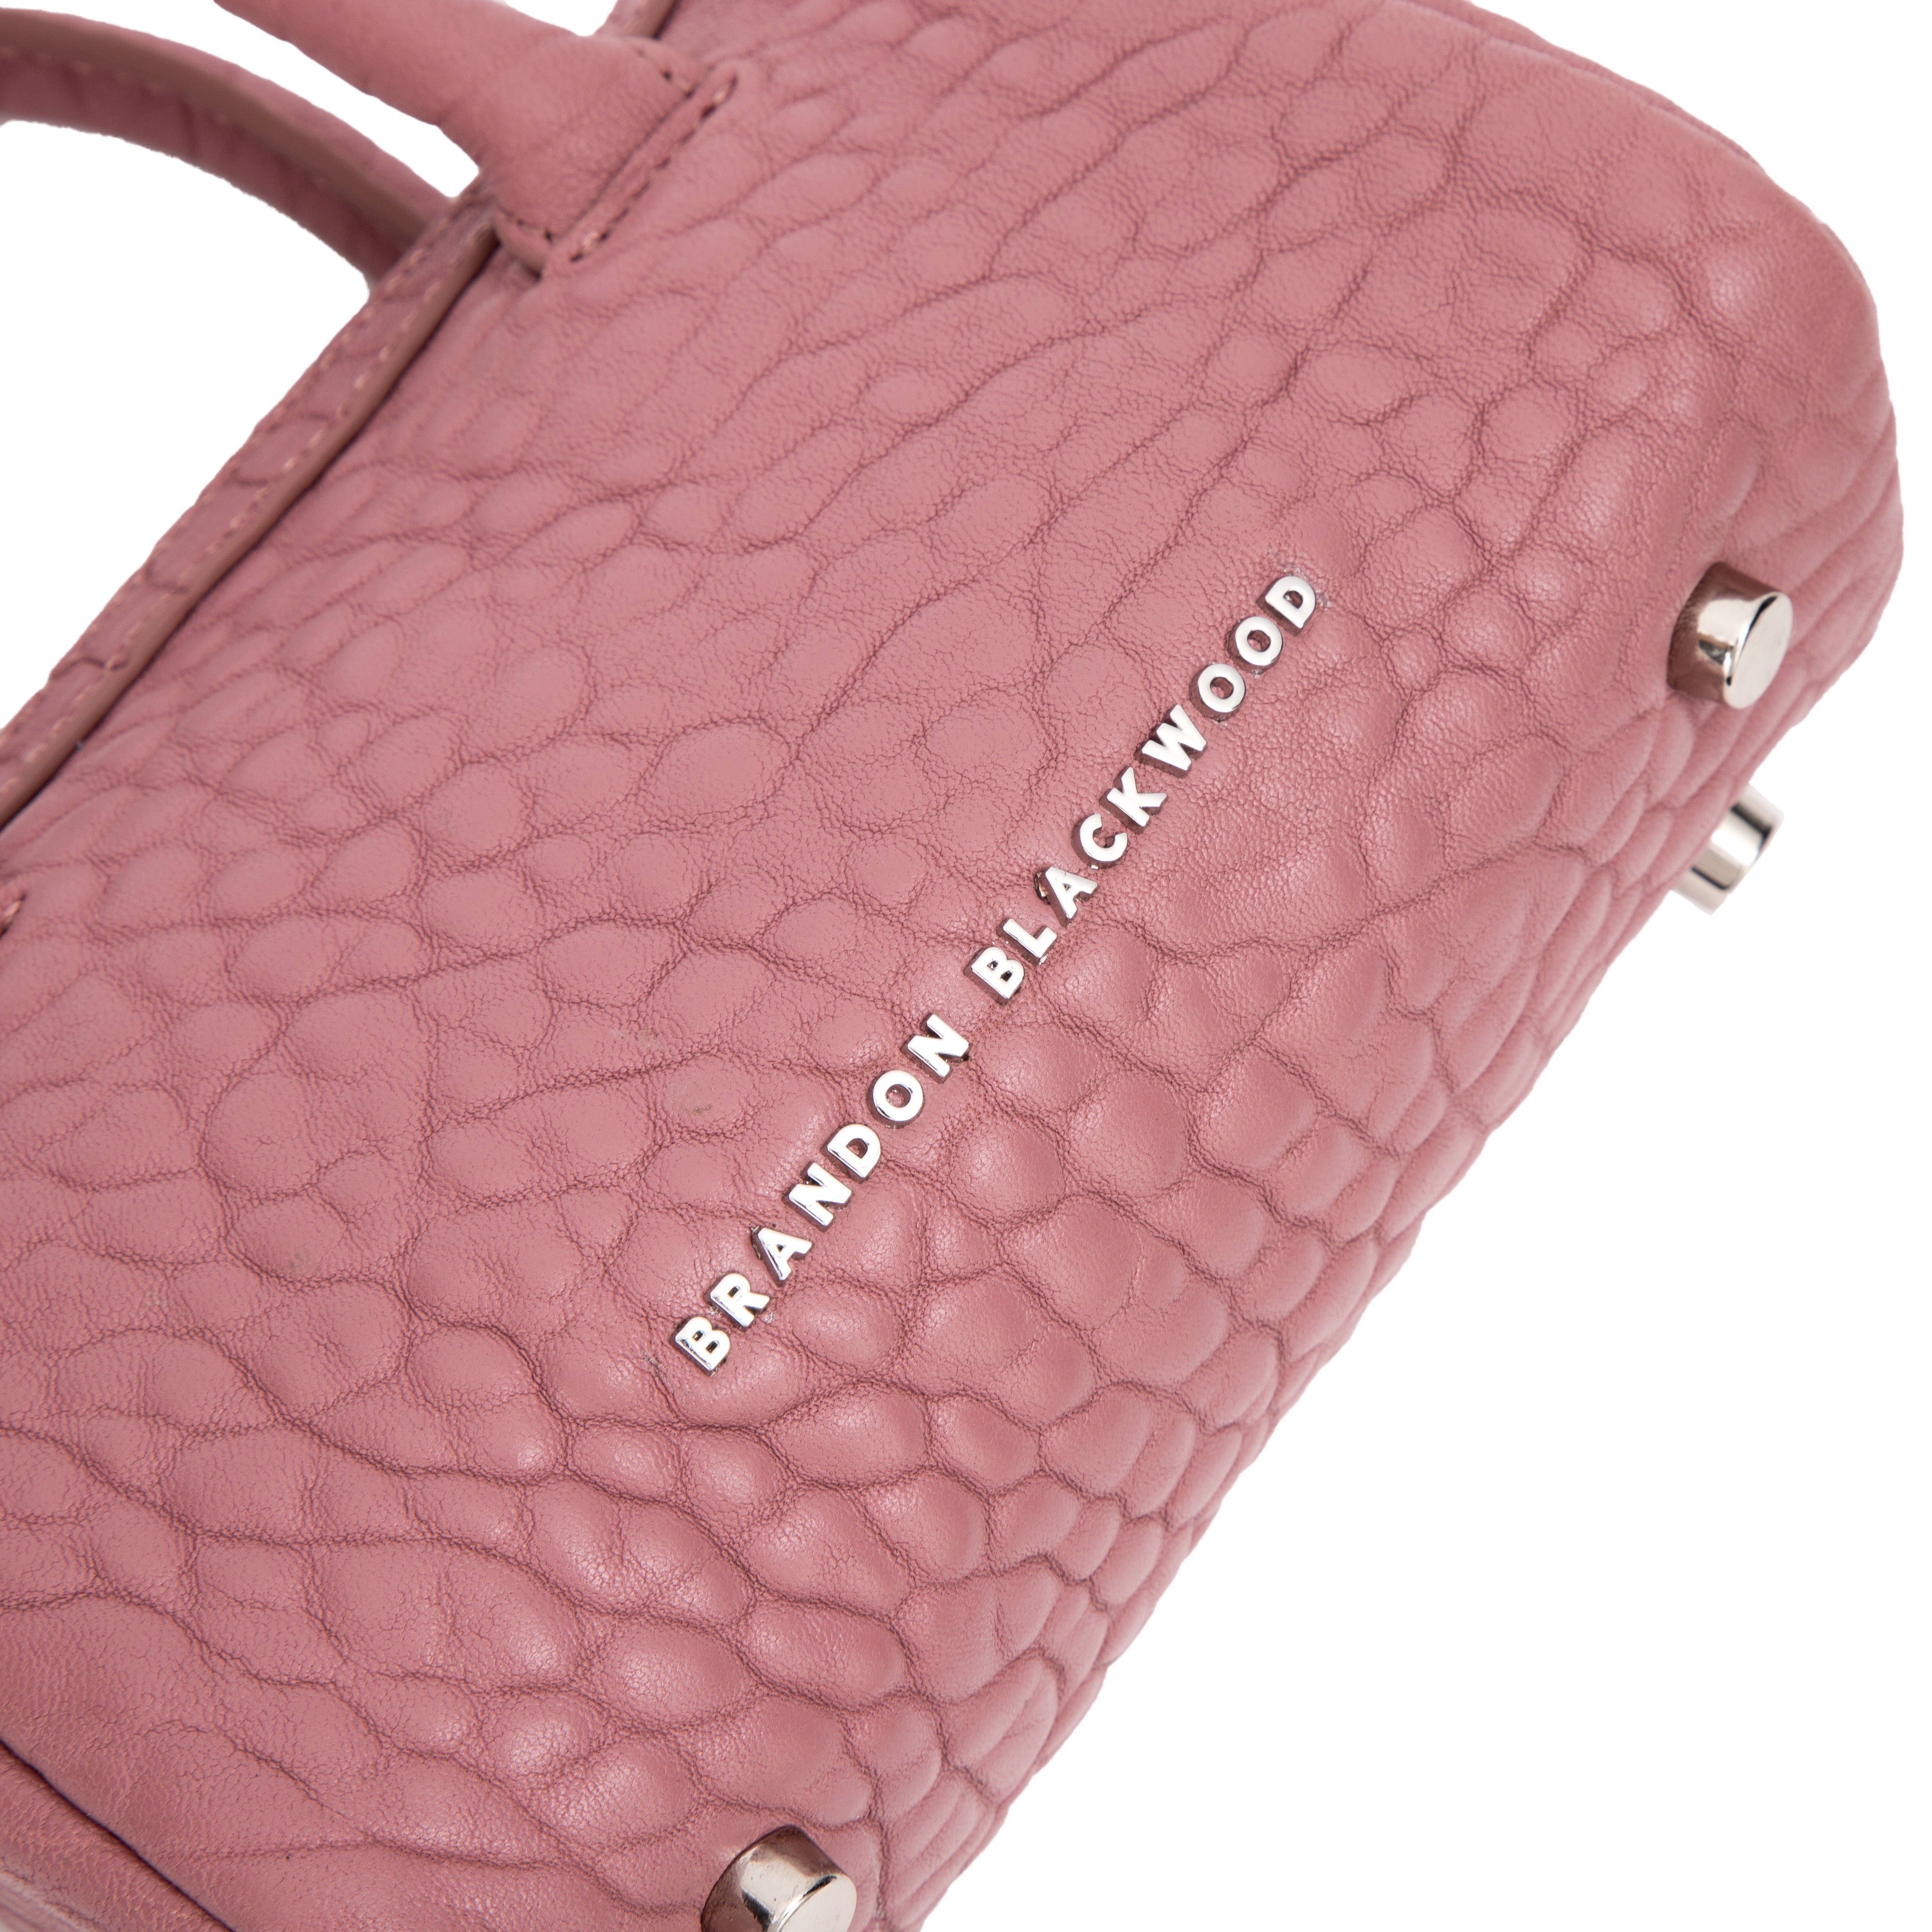 Brandon Blackwood New York - Mini Cara Duffle Bag - Pink Bubble Leather